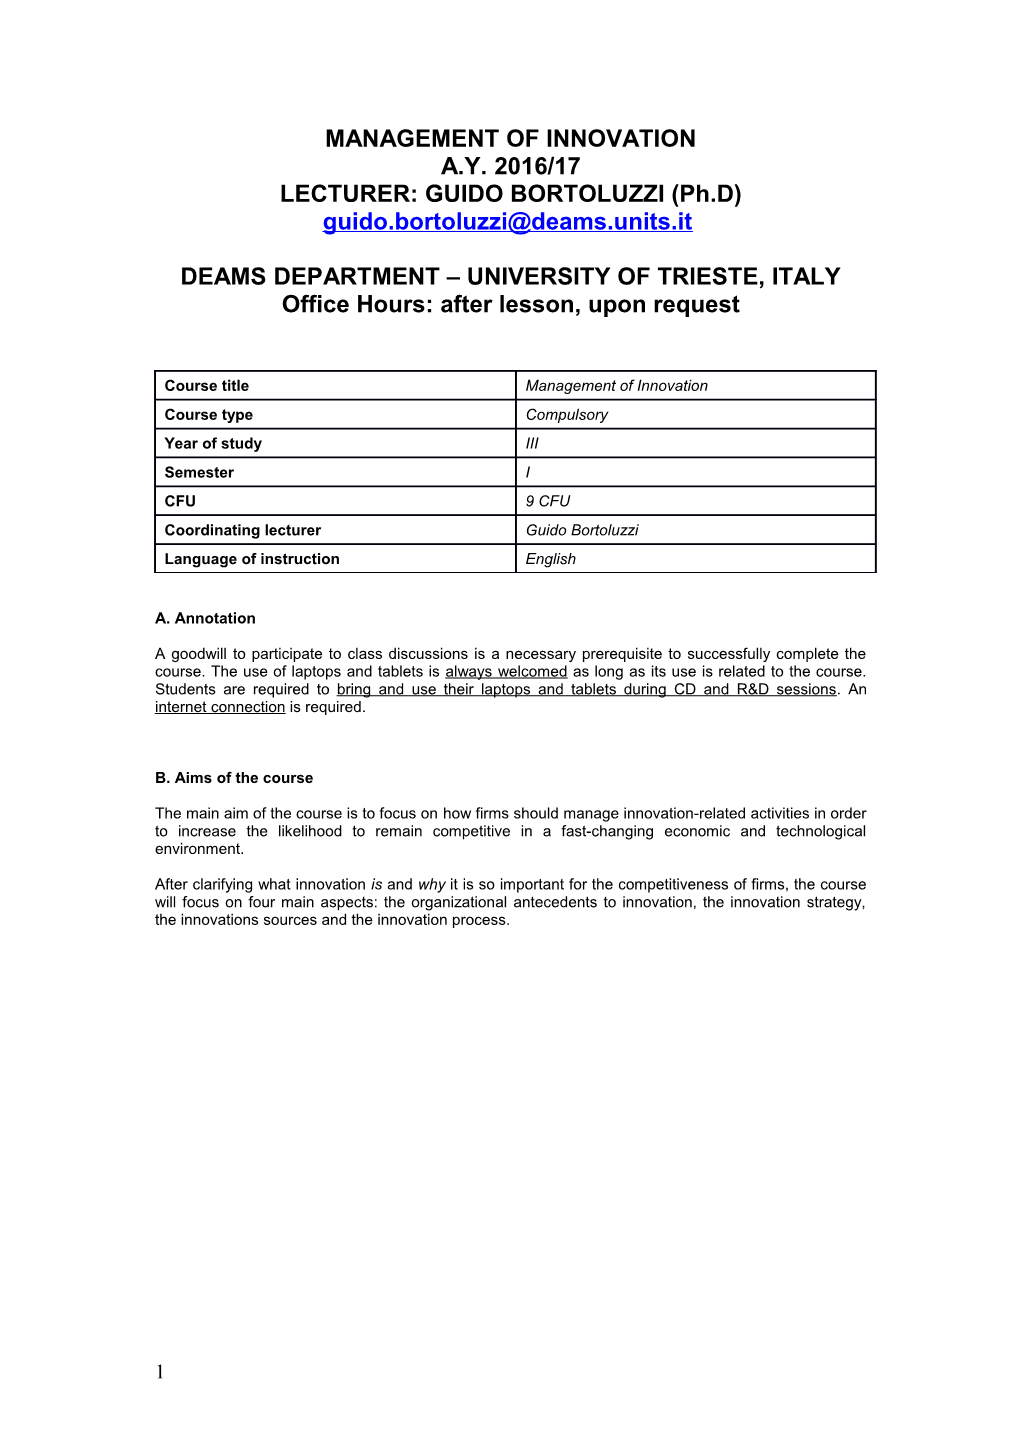 Deams Department University of Trieste, Italy